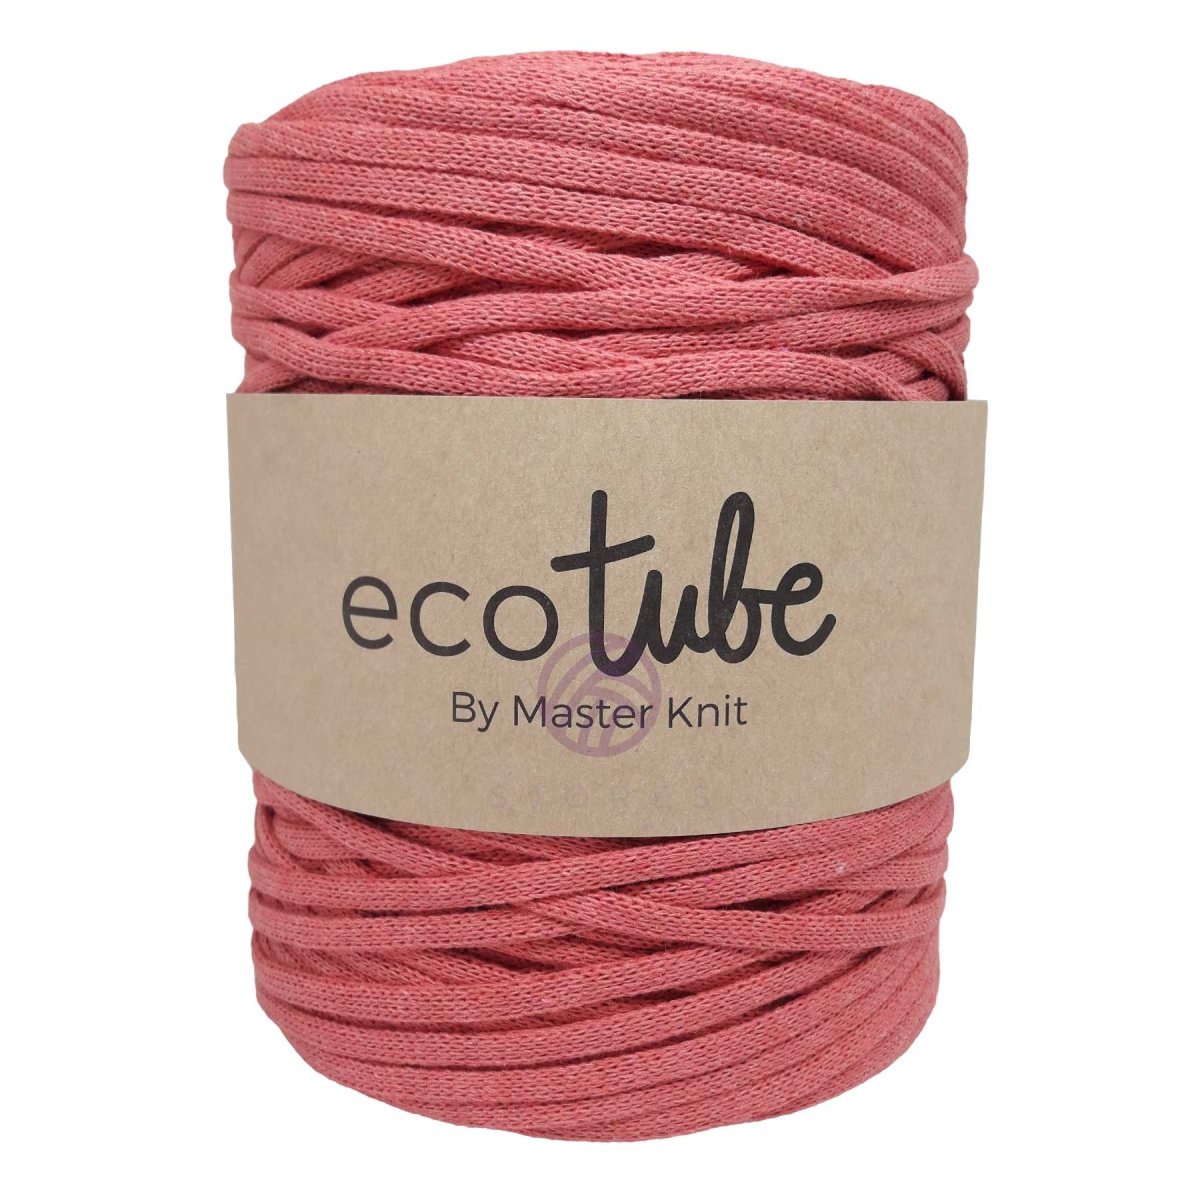 ECO TUBE - Crochetstores9380-495